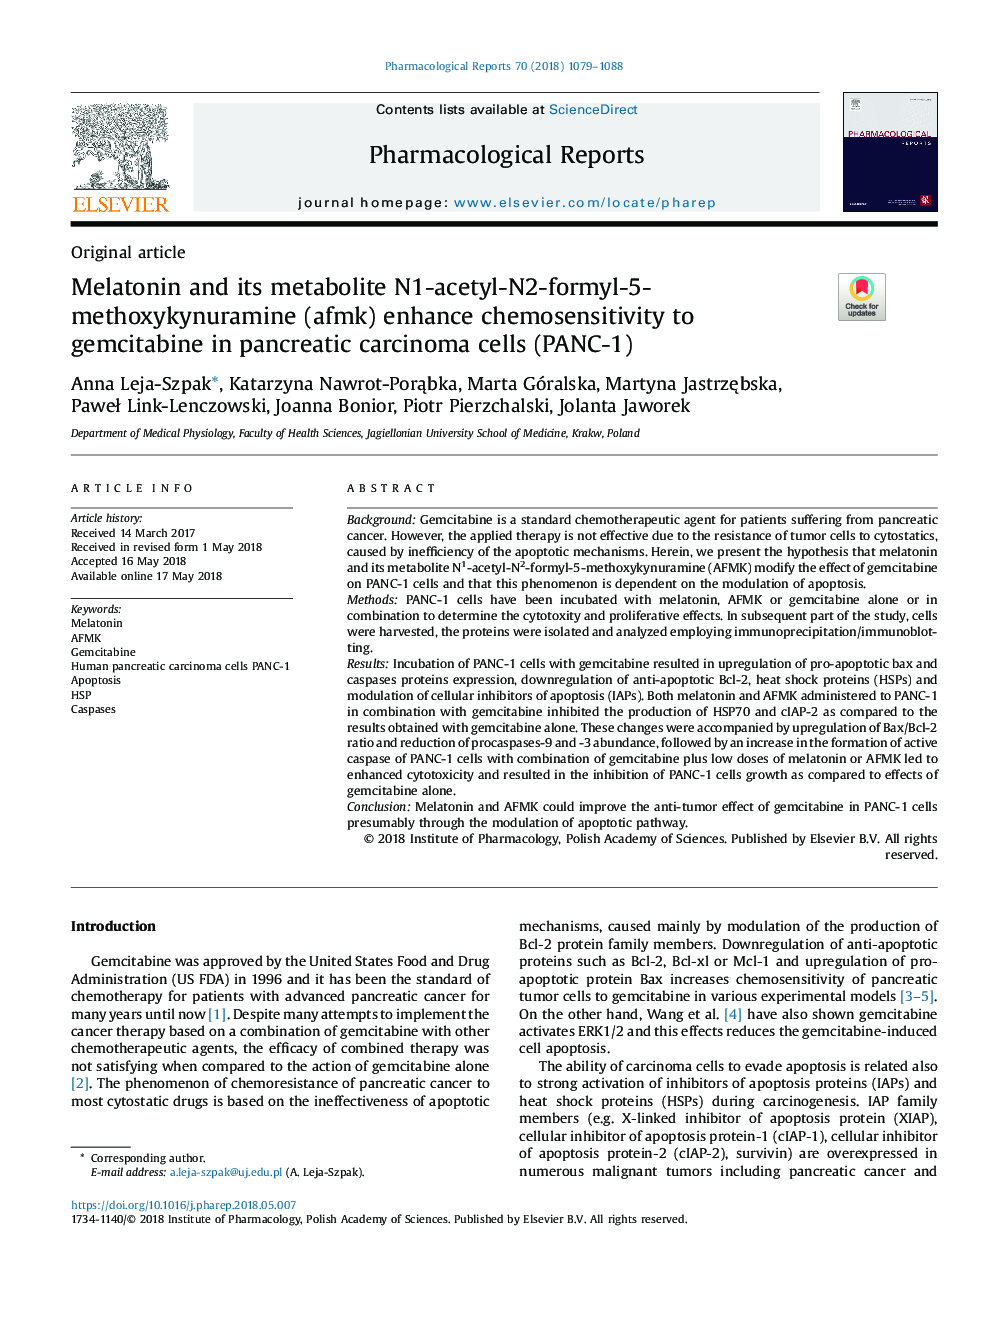 Melatonin and its metabolite N1-acetyl-N2-formyl-5-methoxykynuramine (afmk) enhance chemosensitivity to gemcitabine in pancreatic carcinoma cells (PANC-1)